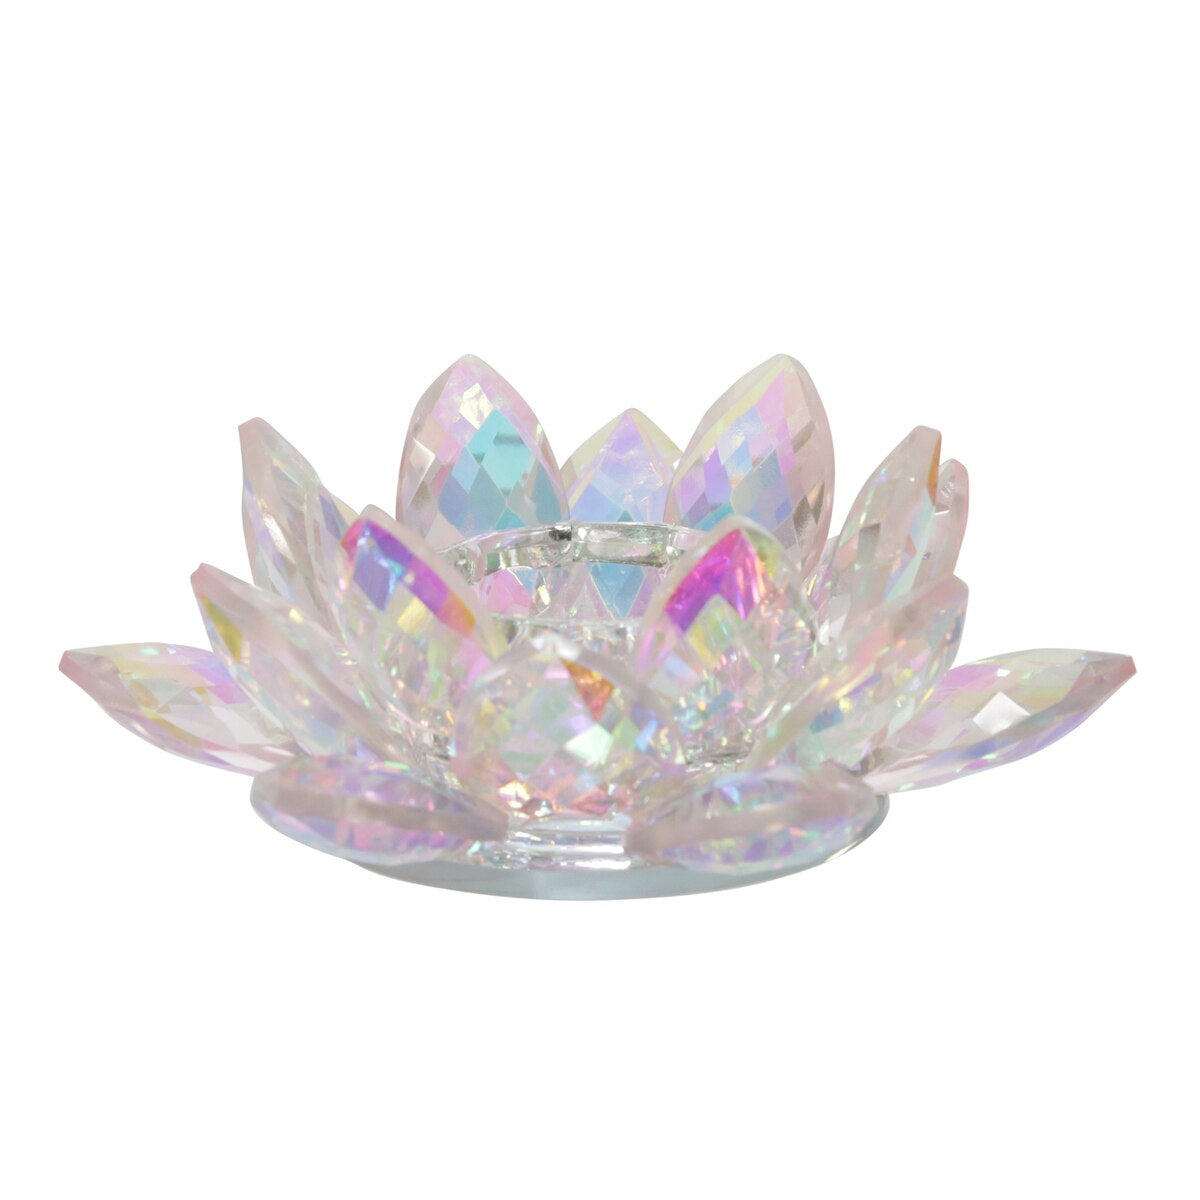 Blush Crystal Lotus Votive Holder 6"